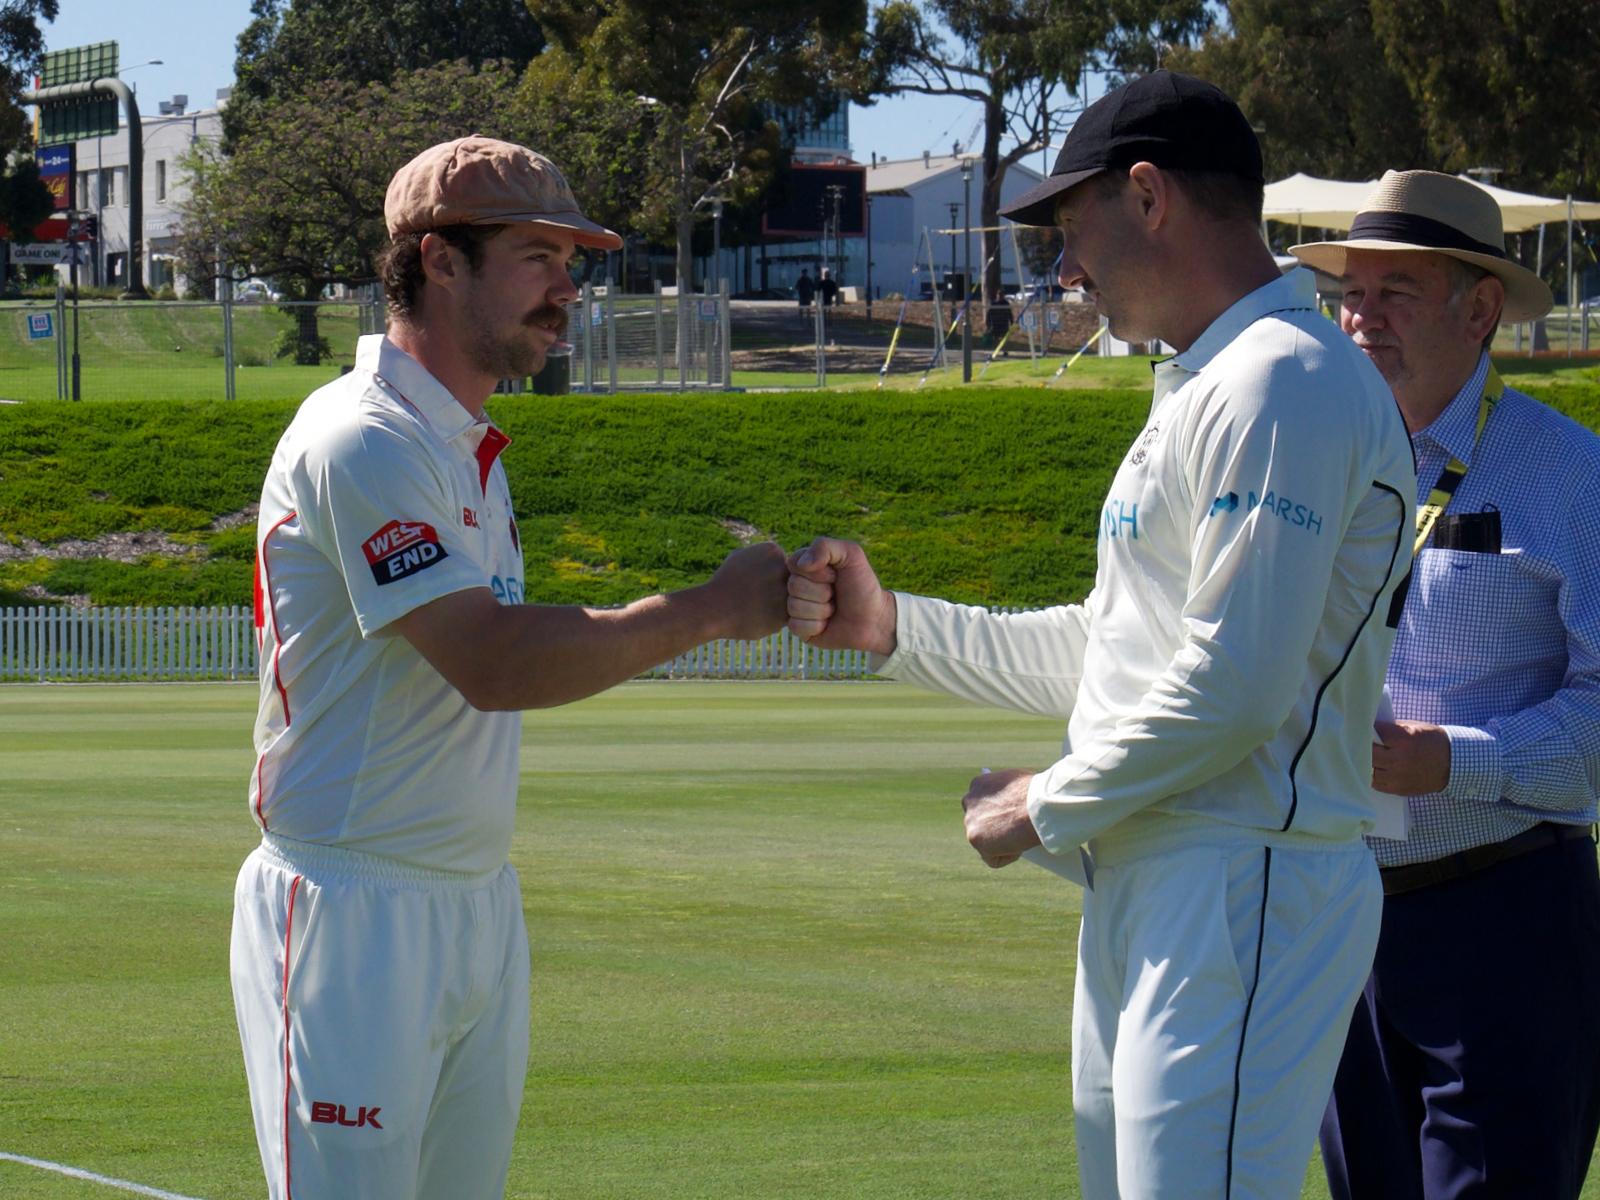 Travis Head and Shaun Marsh Toss // On the Cricket Network